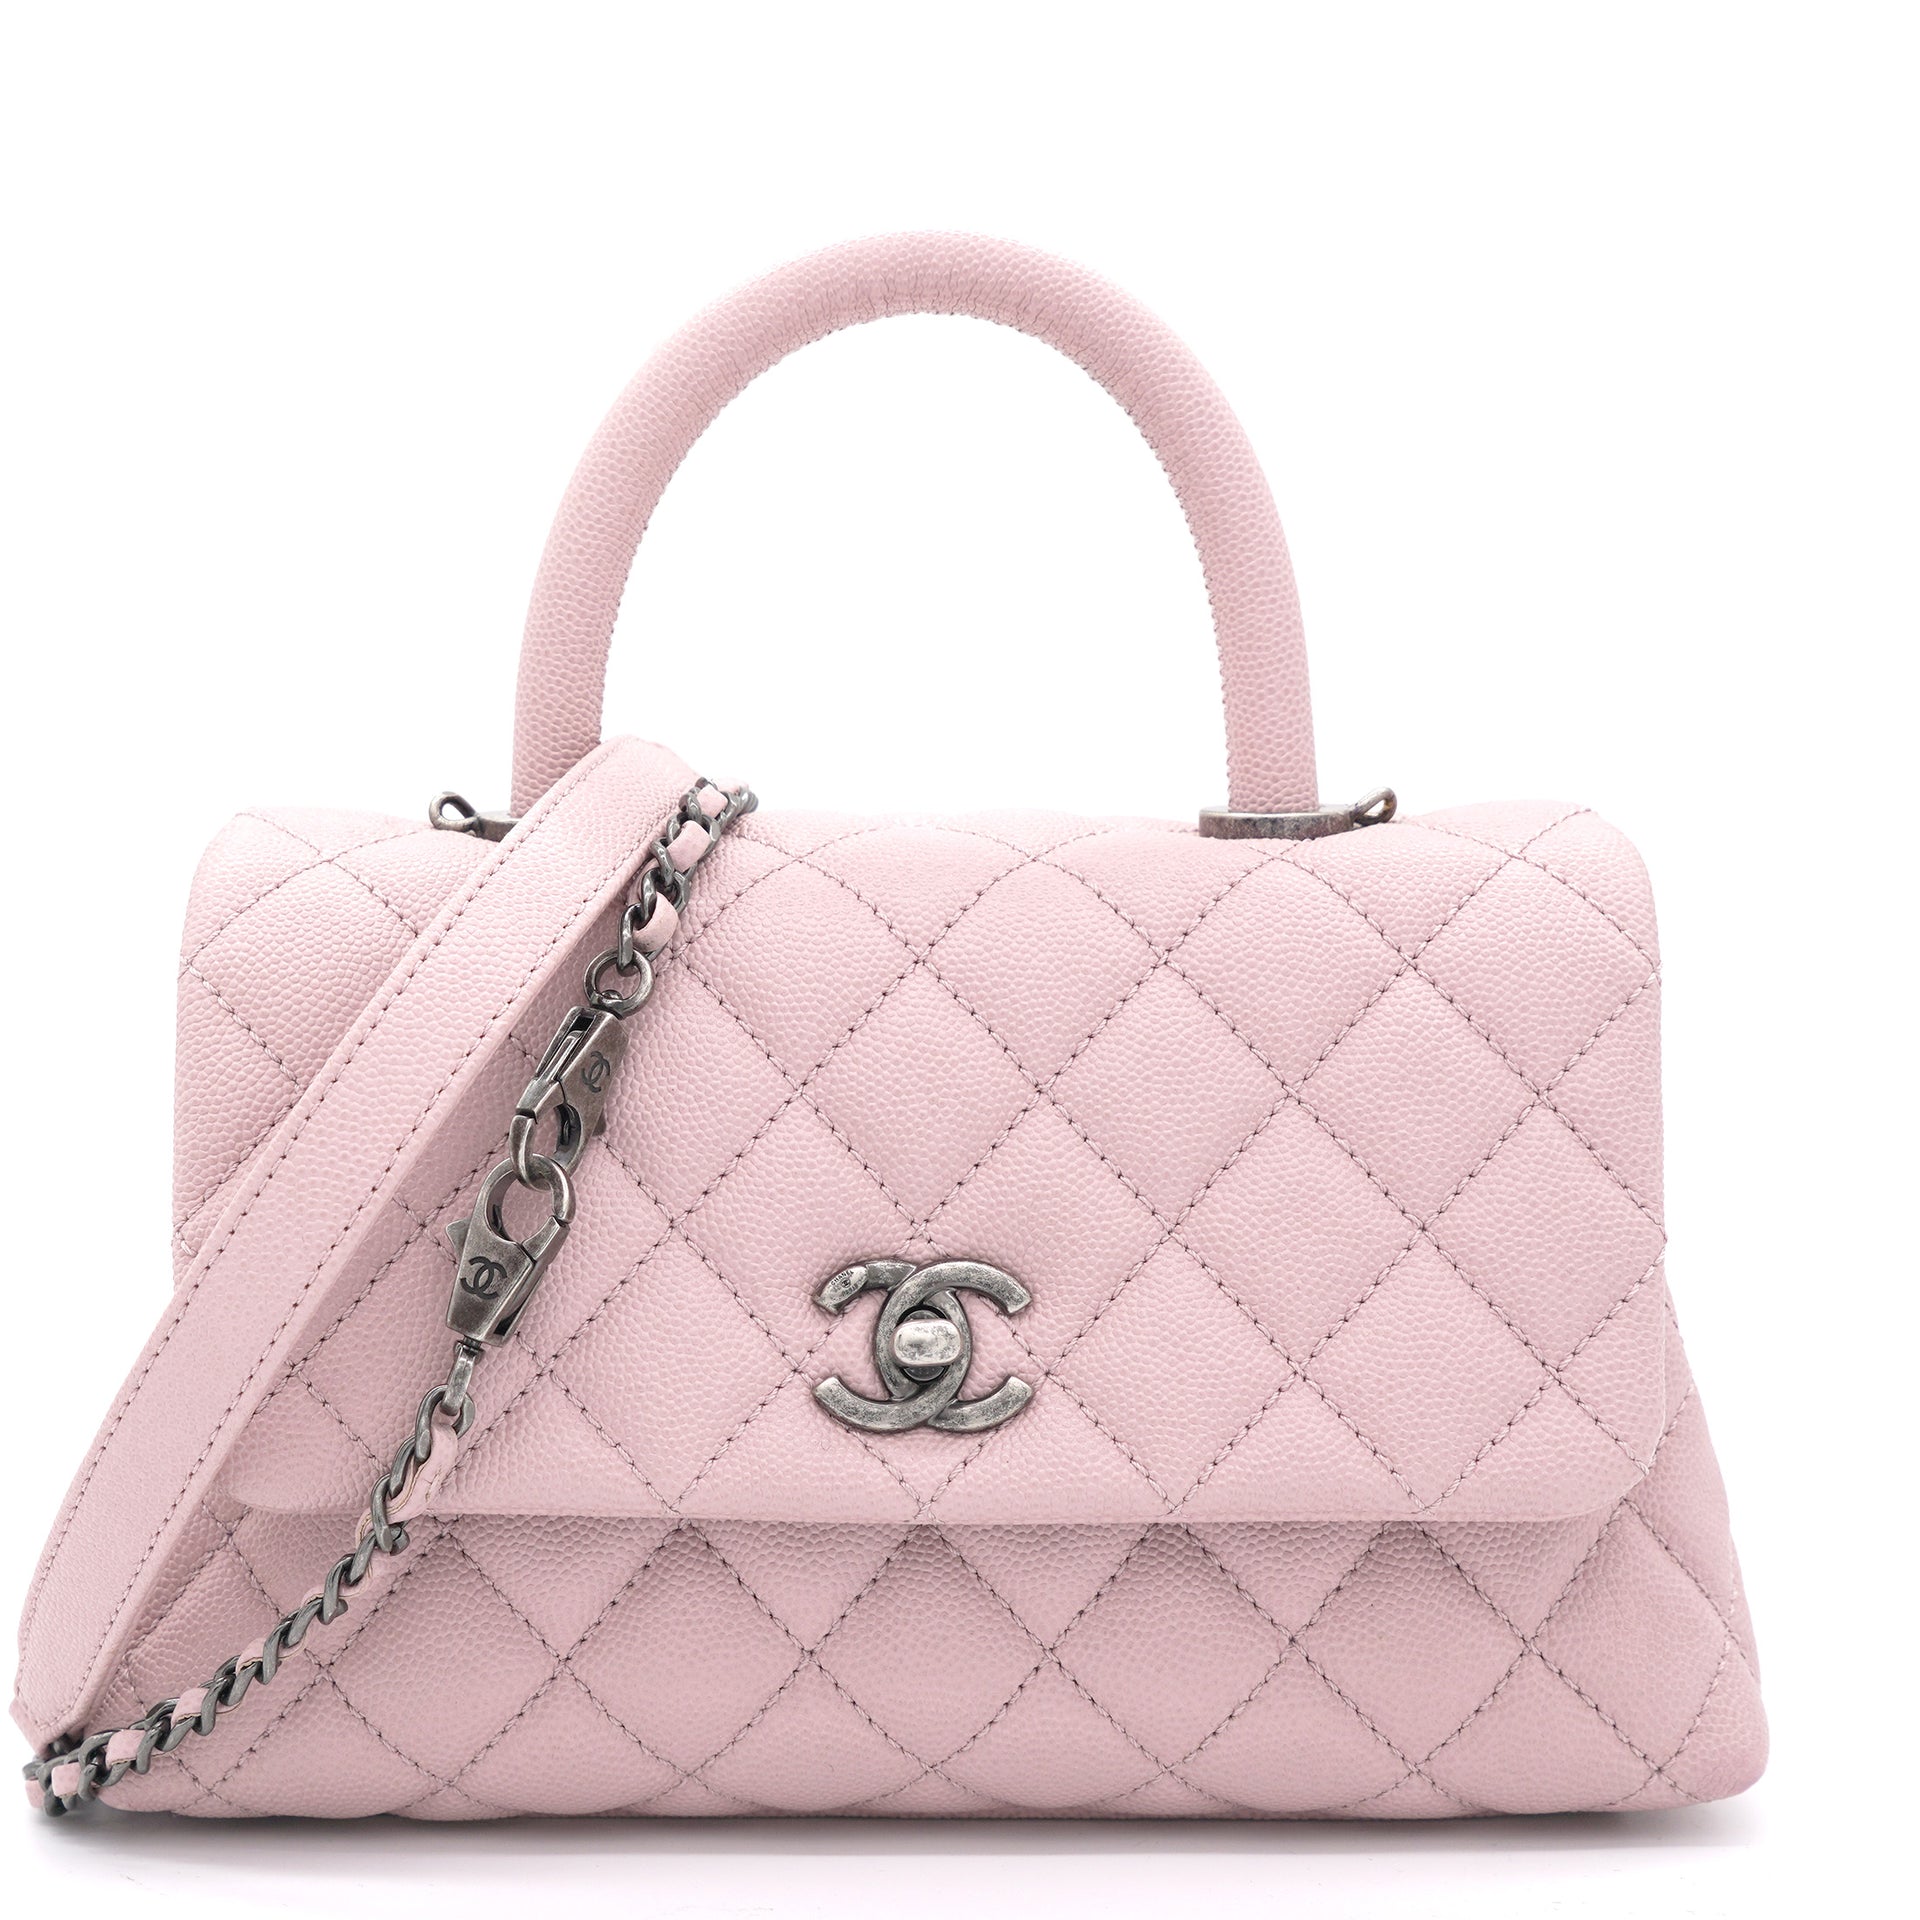 Lambskin  GoldTone Metal Pink Flap Bag with Top Handle  CHANEL  Bags Chanel  bag Flap bag